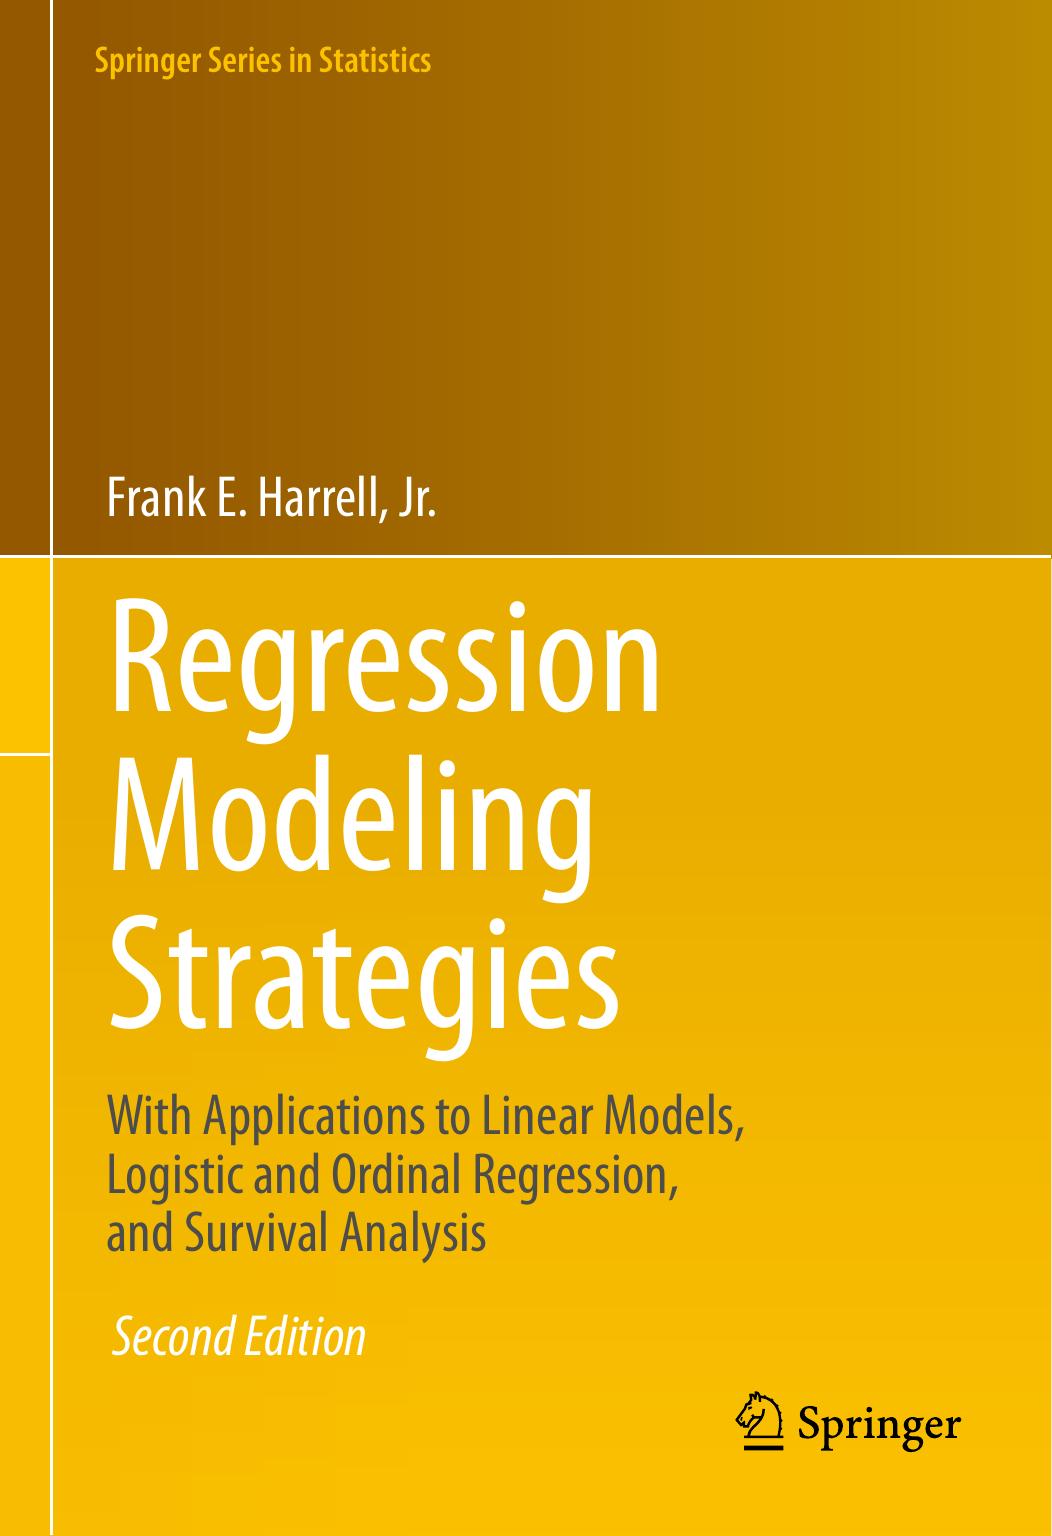 Regression Modeling Strategies by Frank E. Harrell Jr